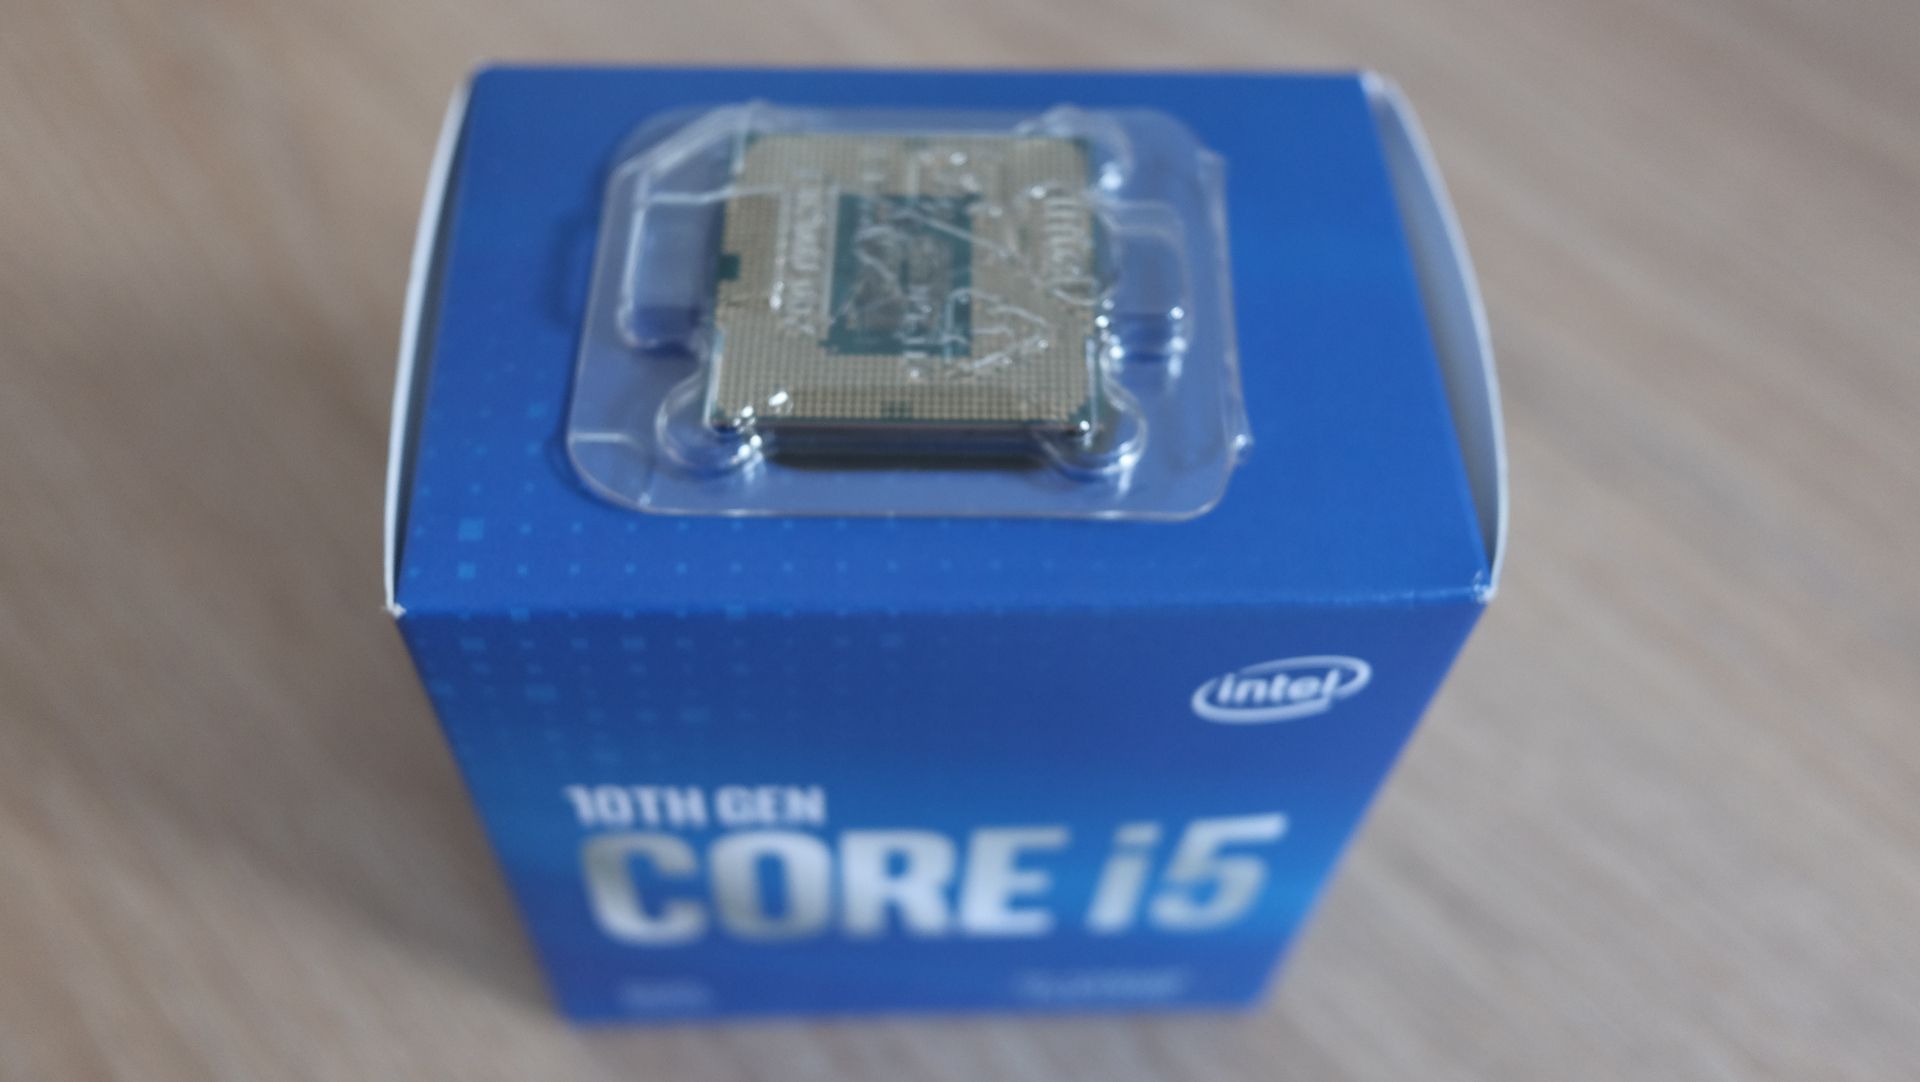 Core i5 12400 uhd